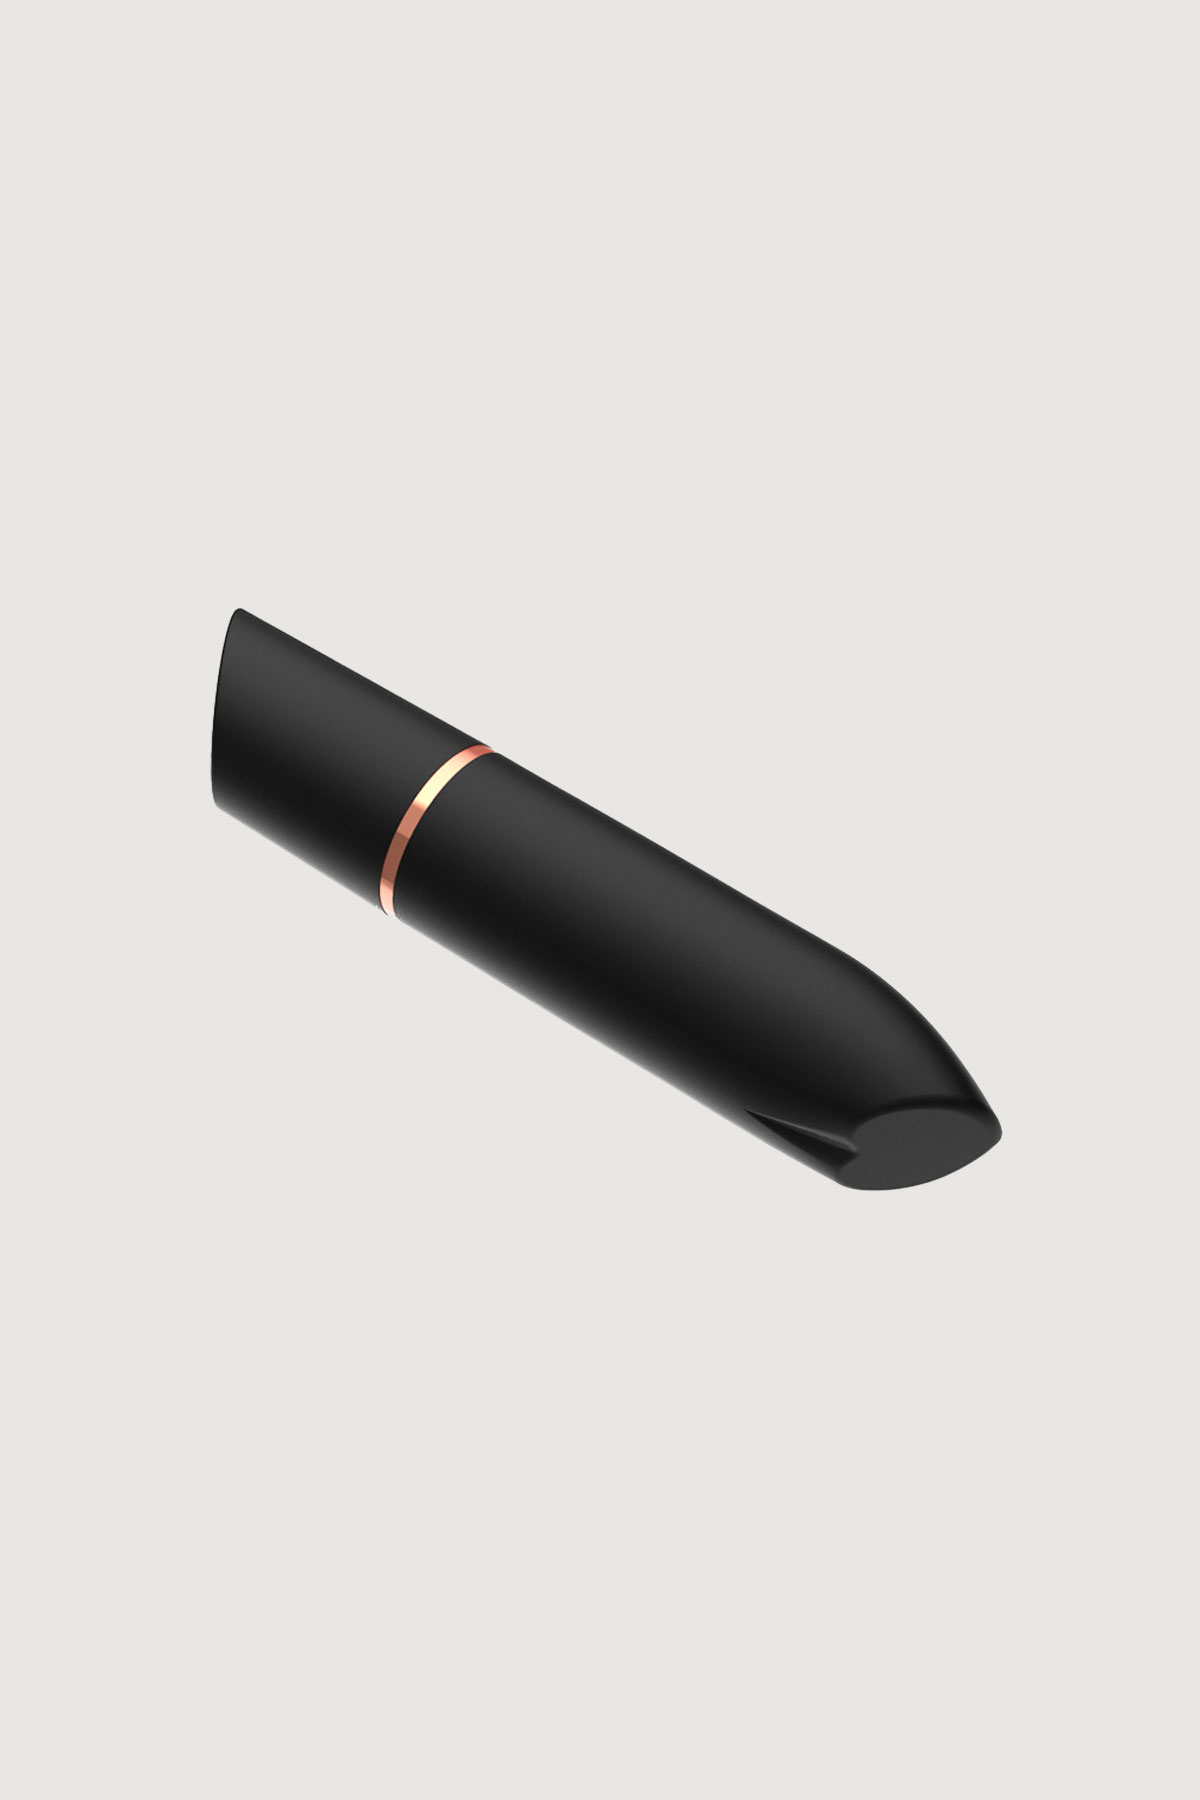 Bala vibradora recargable Rocket Adrien Lastic – adrienlastic